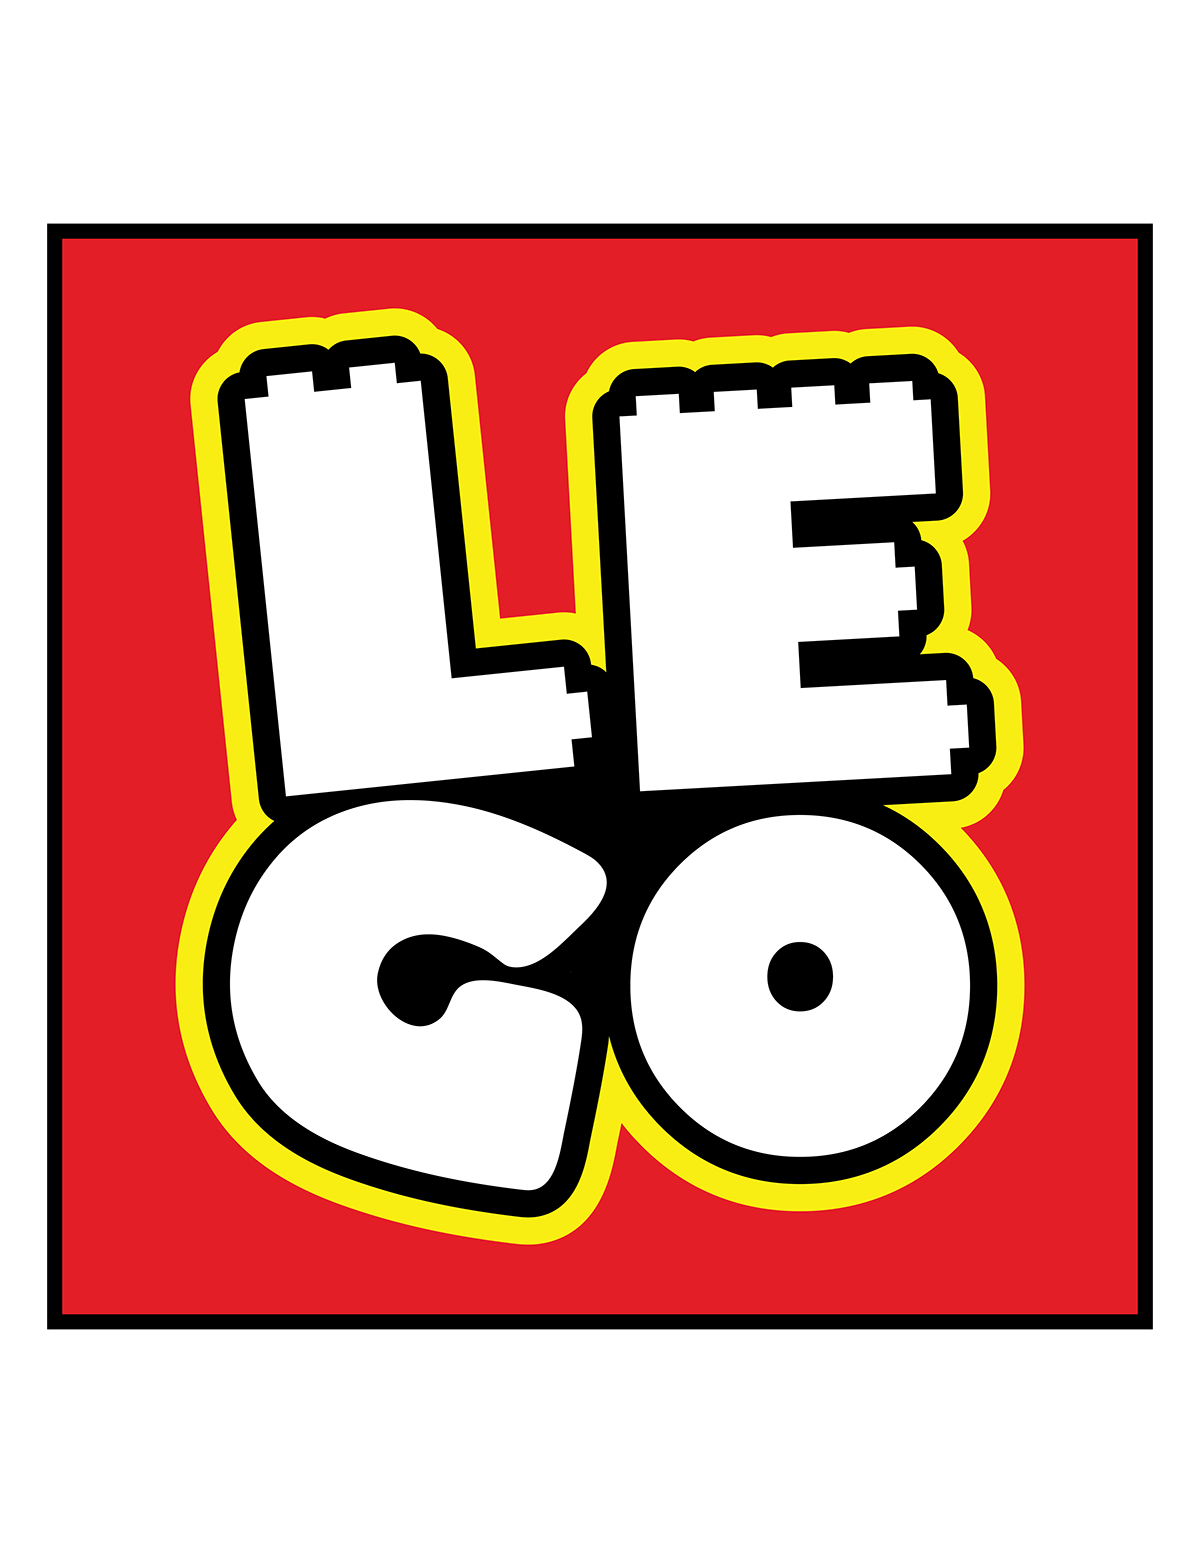 LEGO lego movie Logo Design logo Lego logo creative Creativity graphic design  ILLUSTRATION  graphic